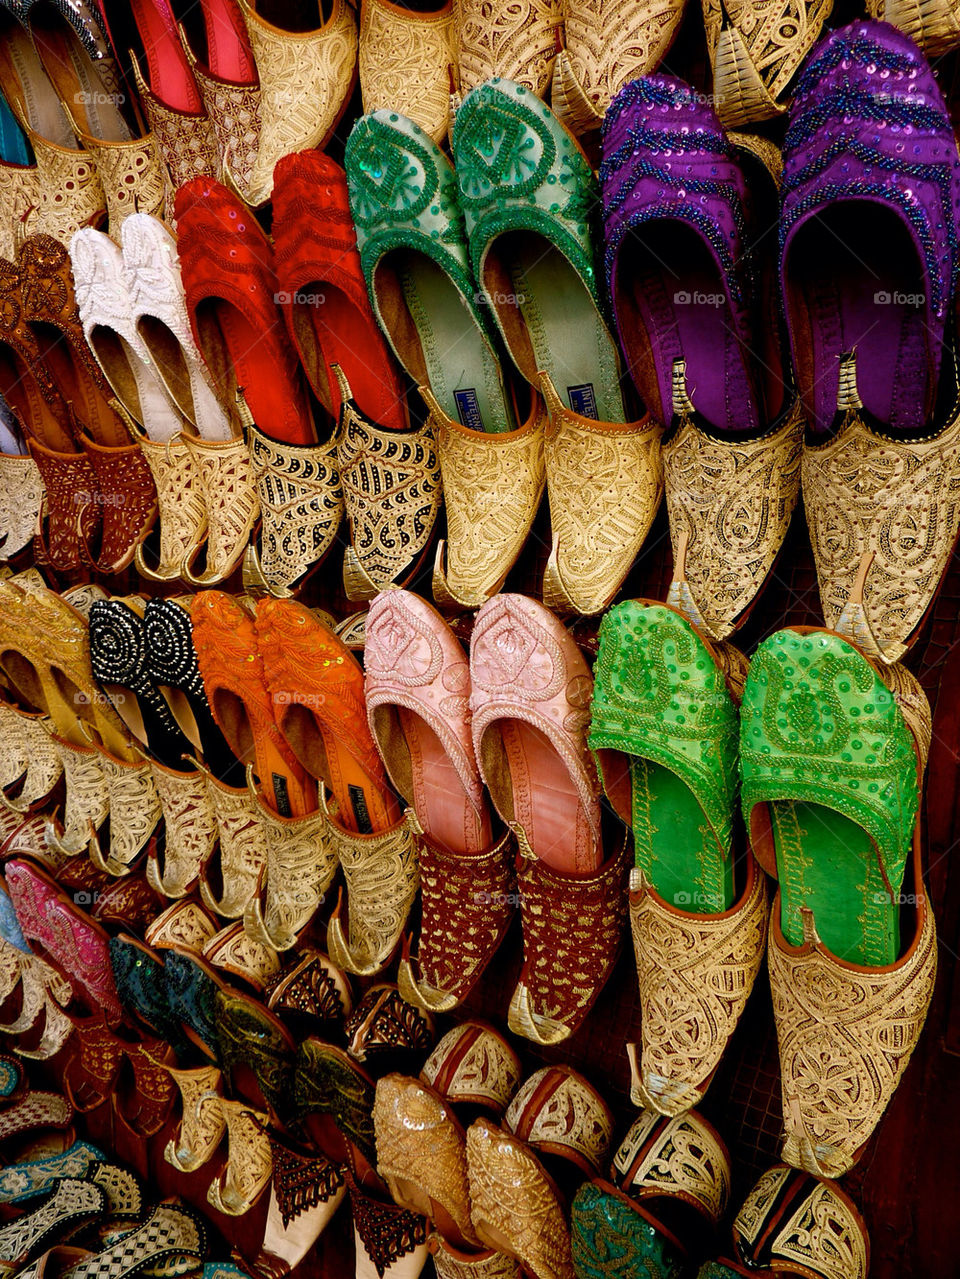 shoes market uae dubai by emmak